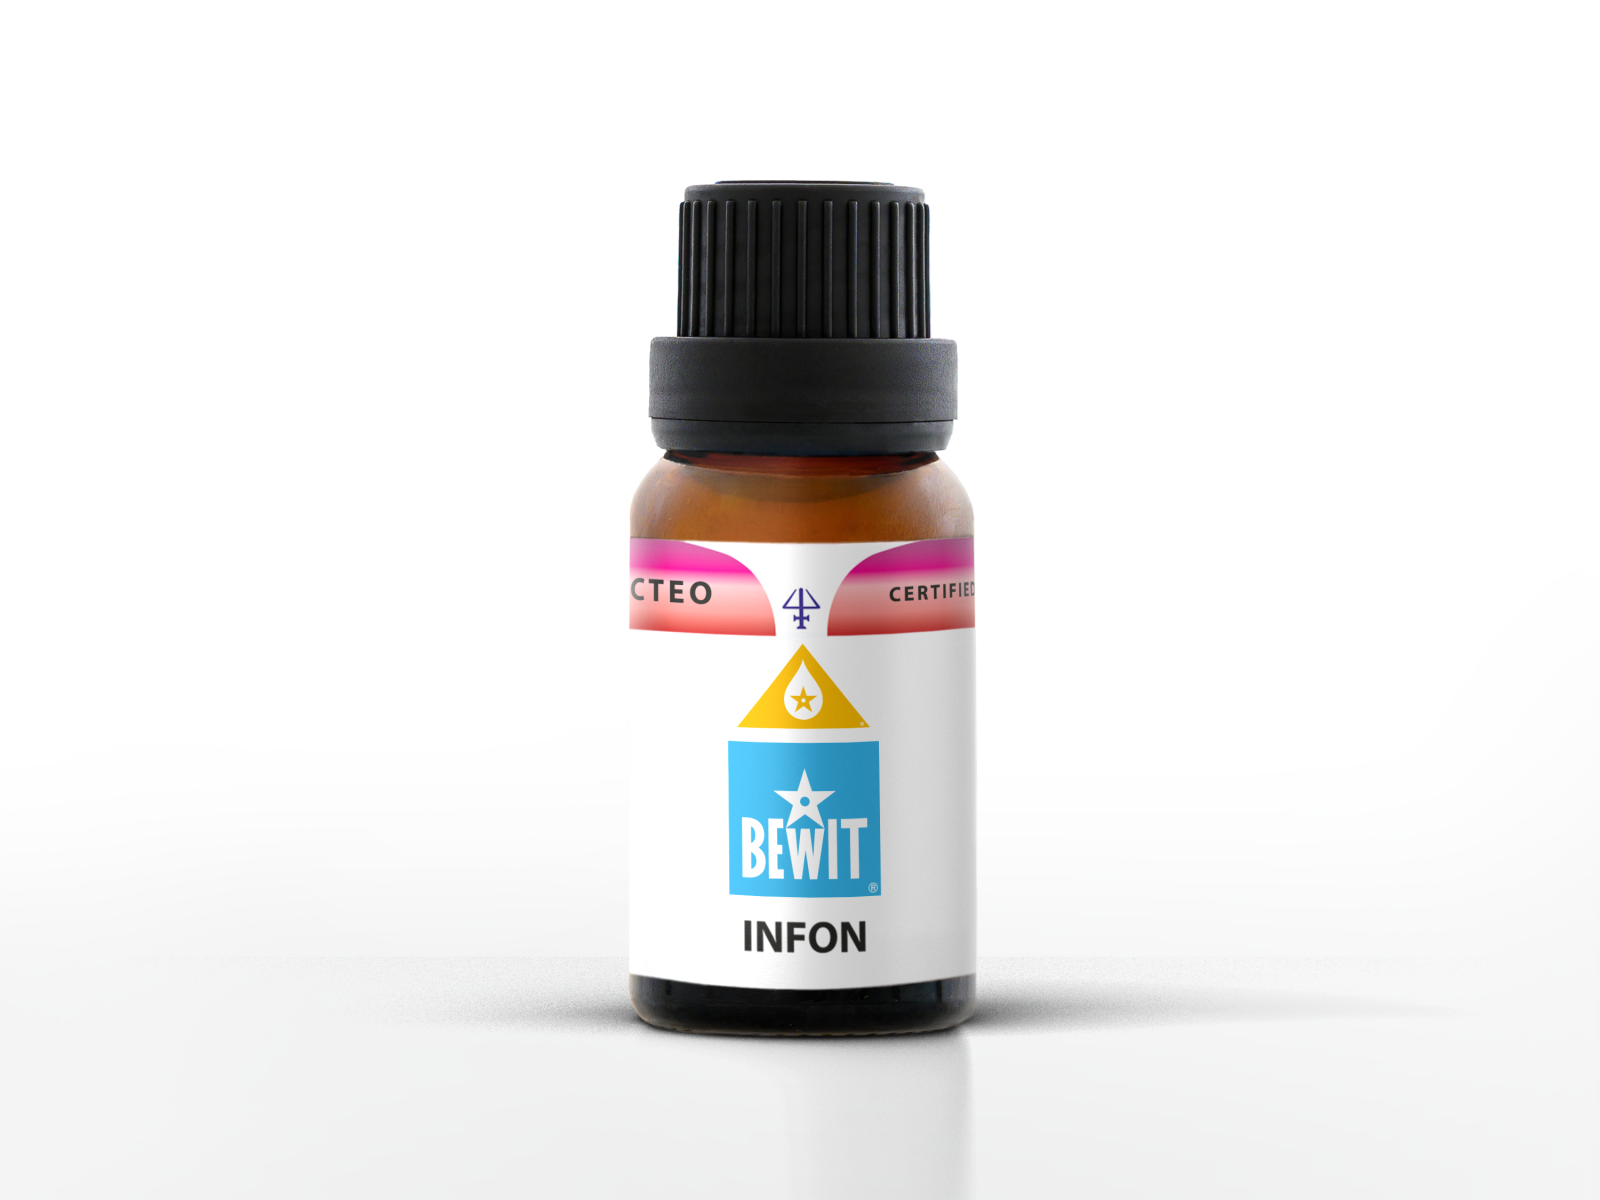 BEWIT INFON - Blend of the essential oils - 1